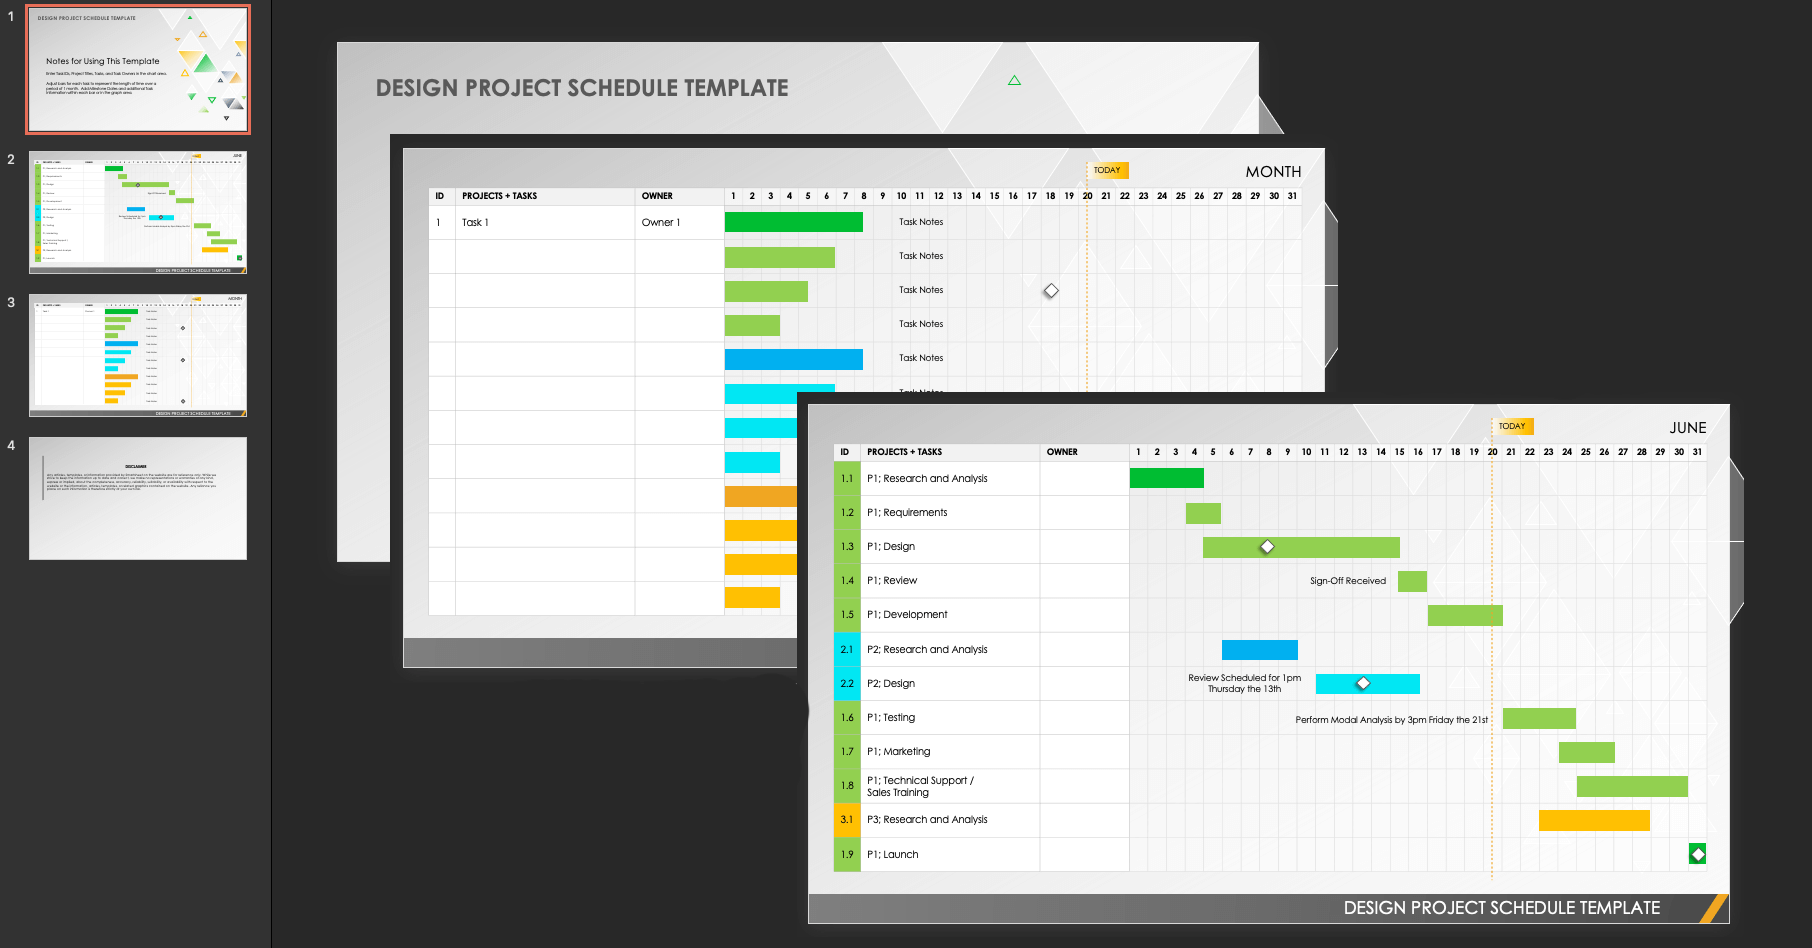 Design Project Schedule Template